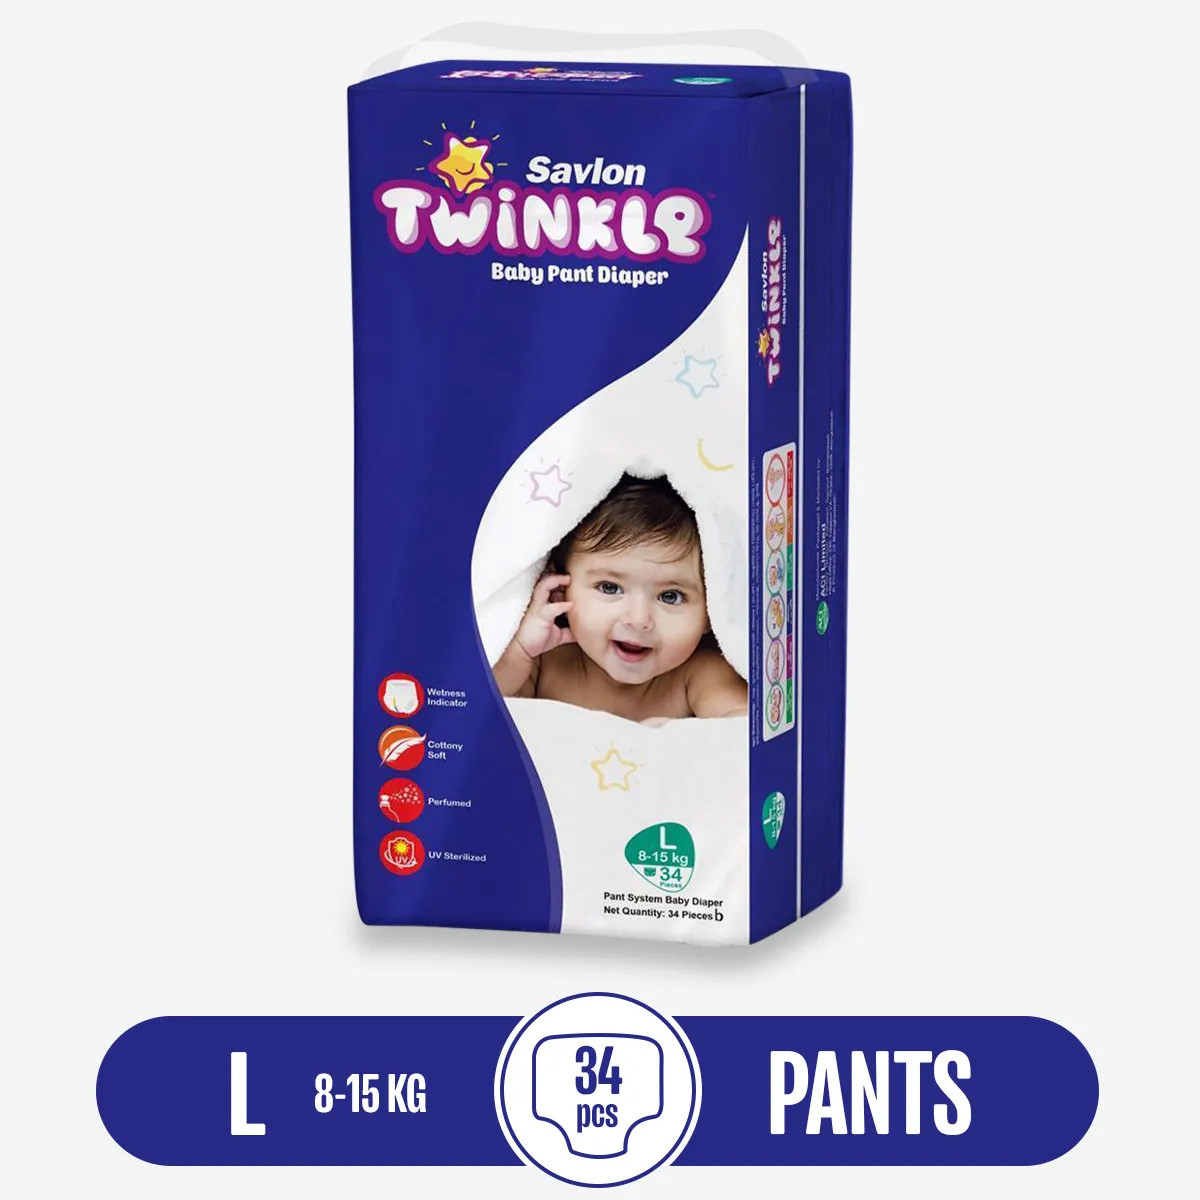 Savlon Twinkle Baby Pant Diaper Large Size- 34 pcs For 8-15 Kg